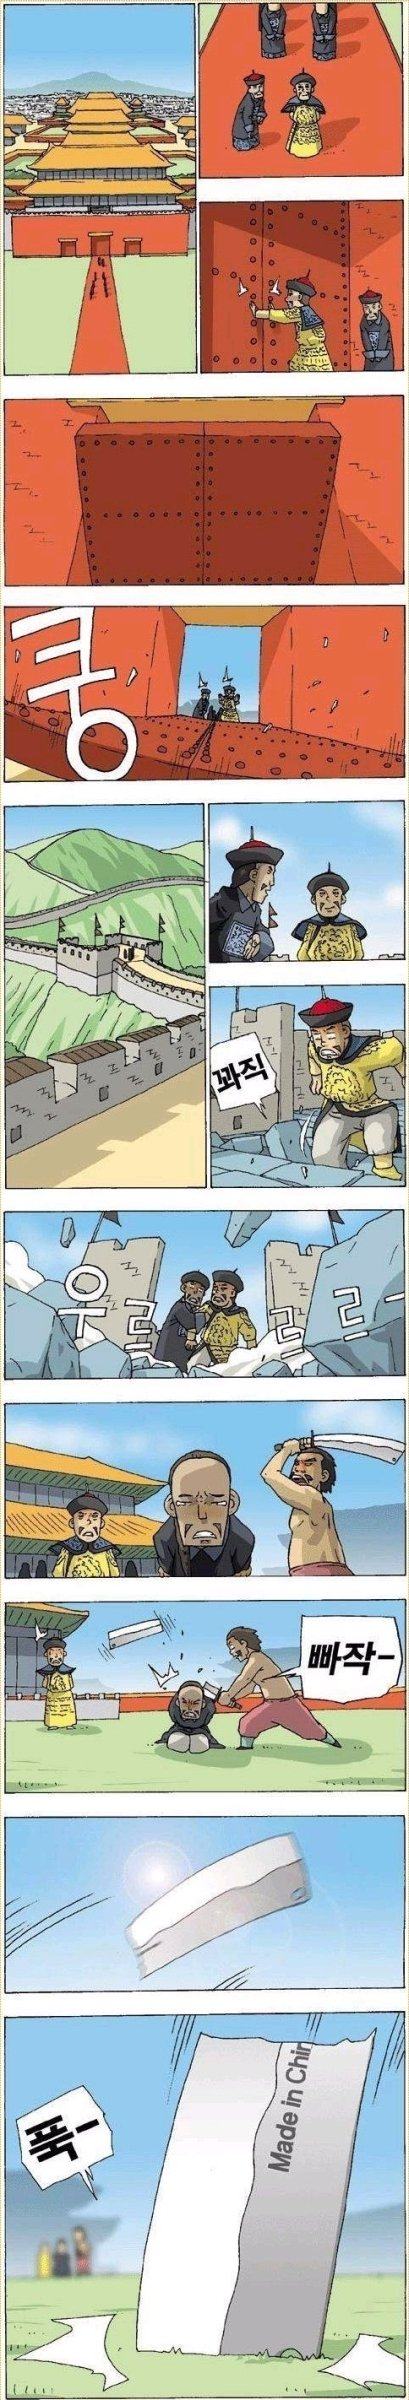 Obrázek made in china comic